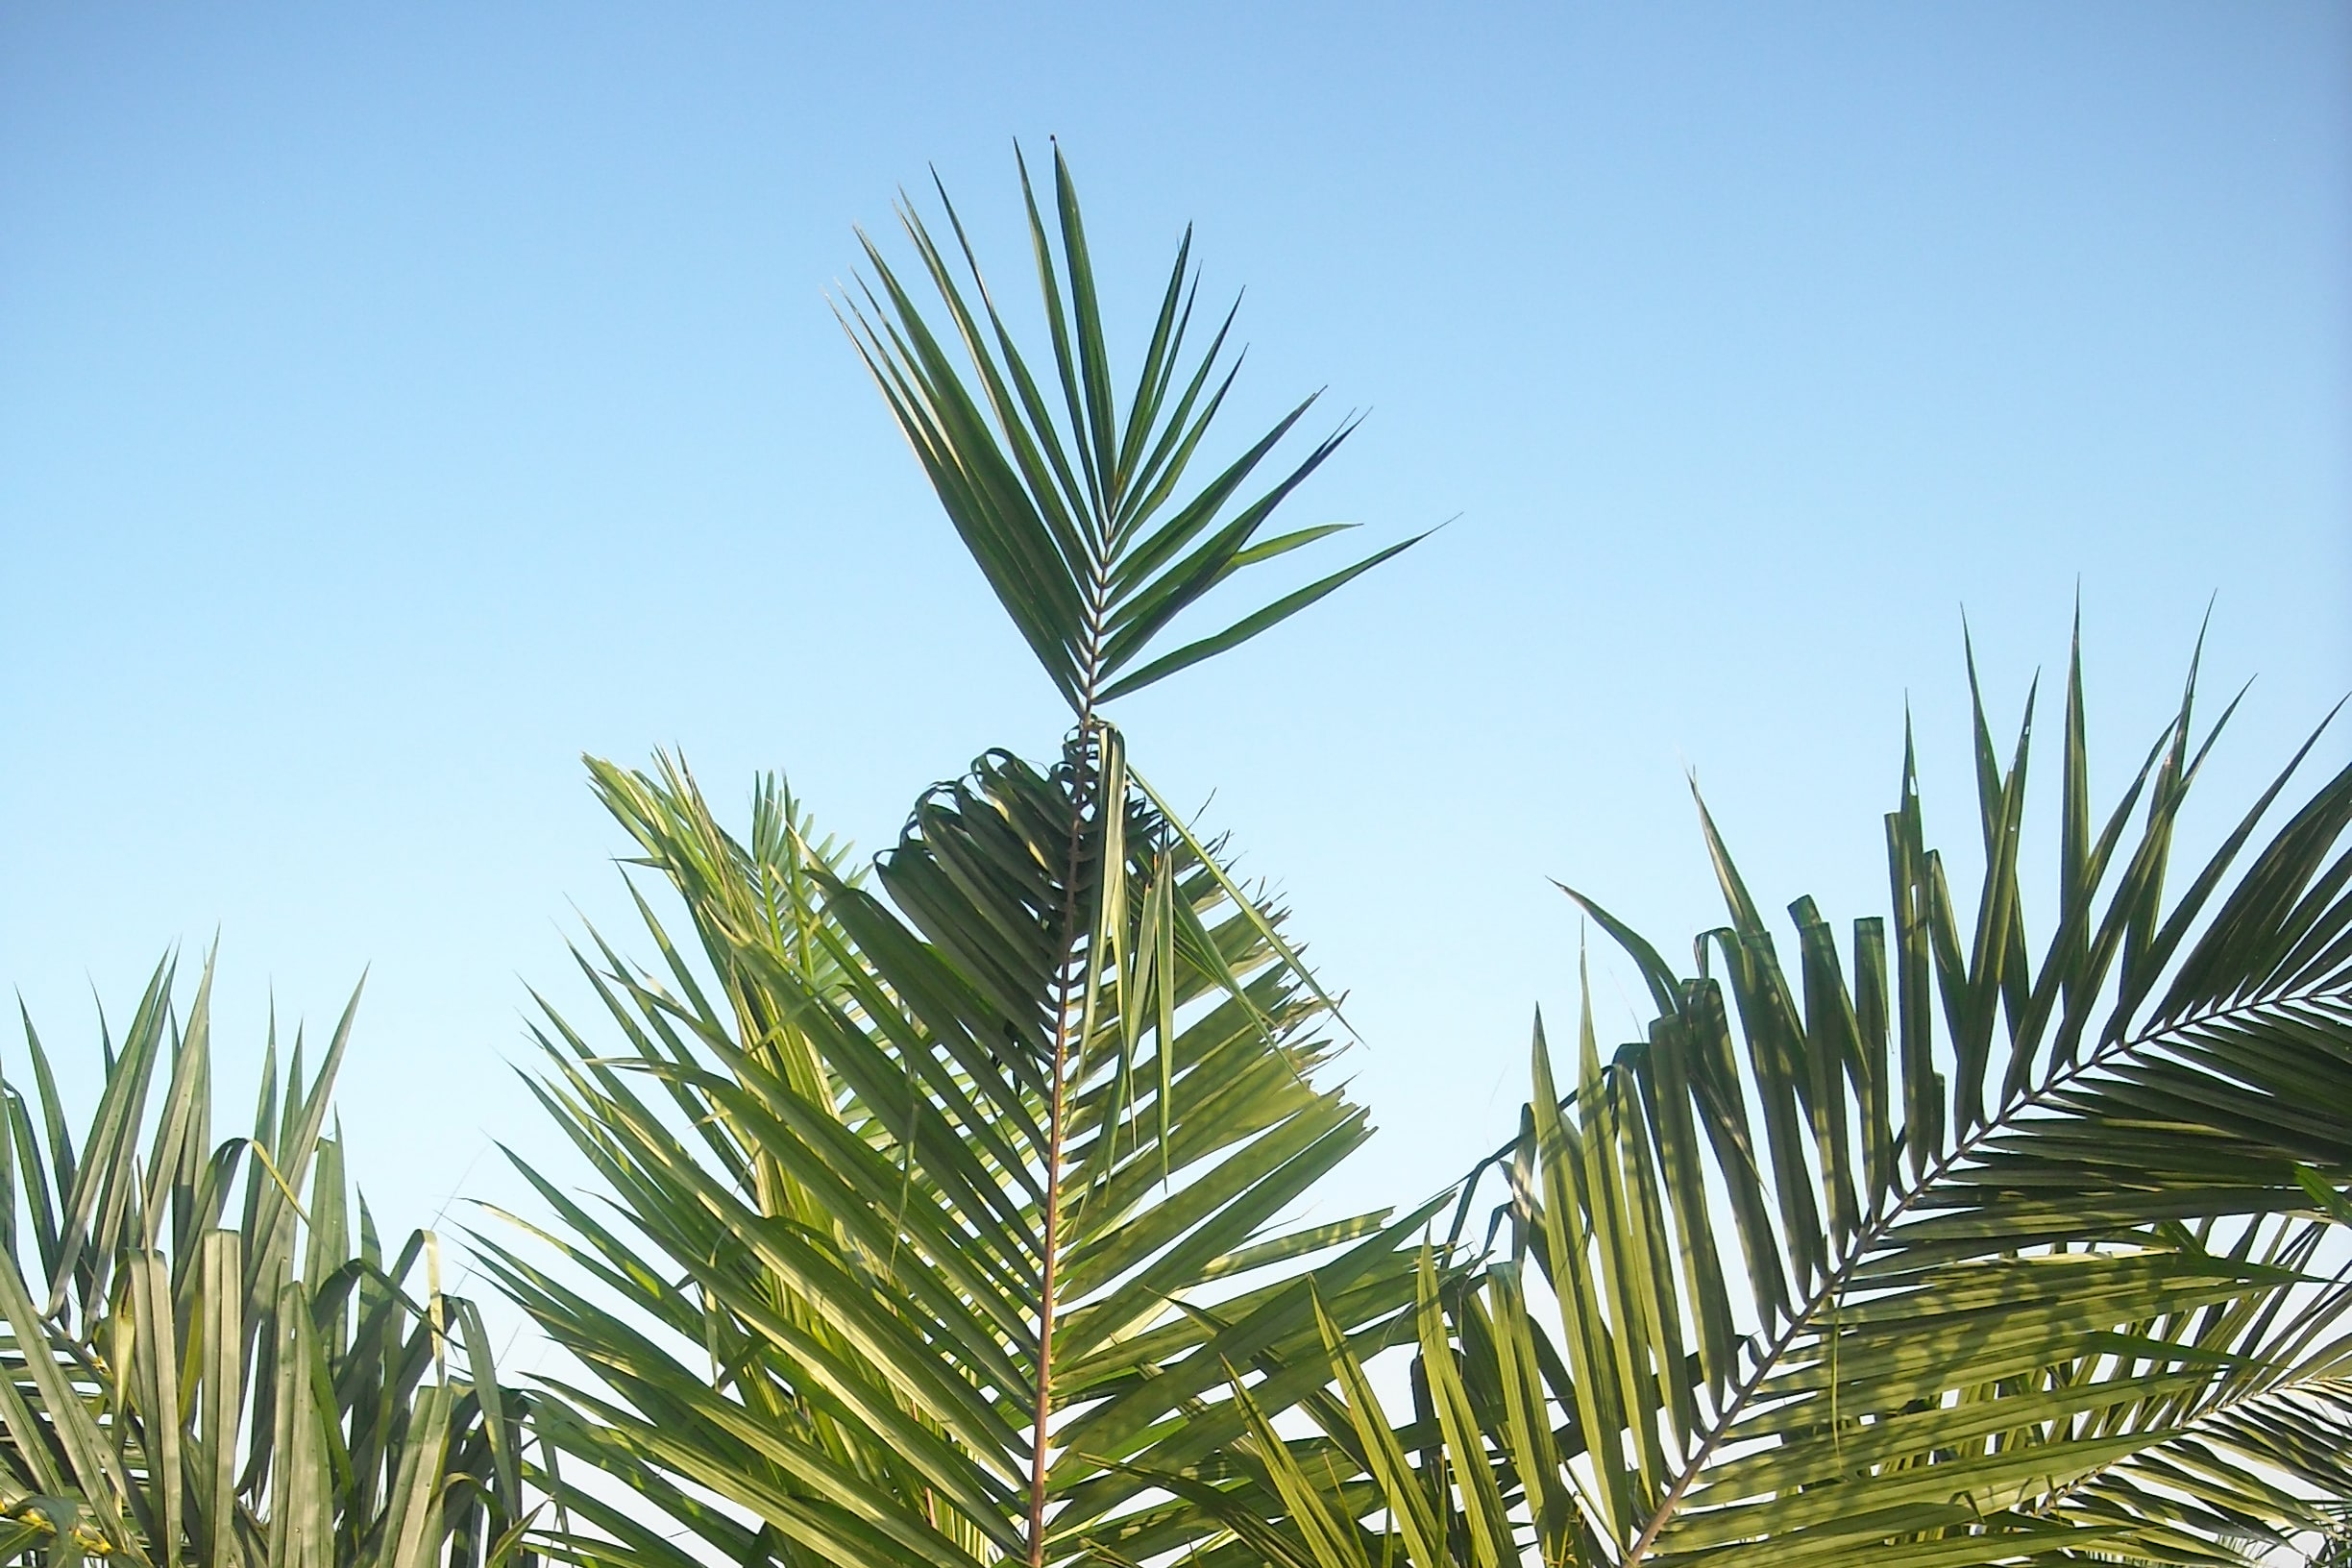 Rhinoceros beetle caused v shaped leaves on oil palm